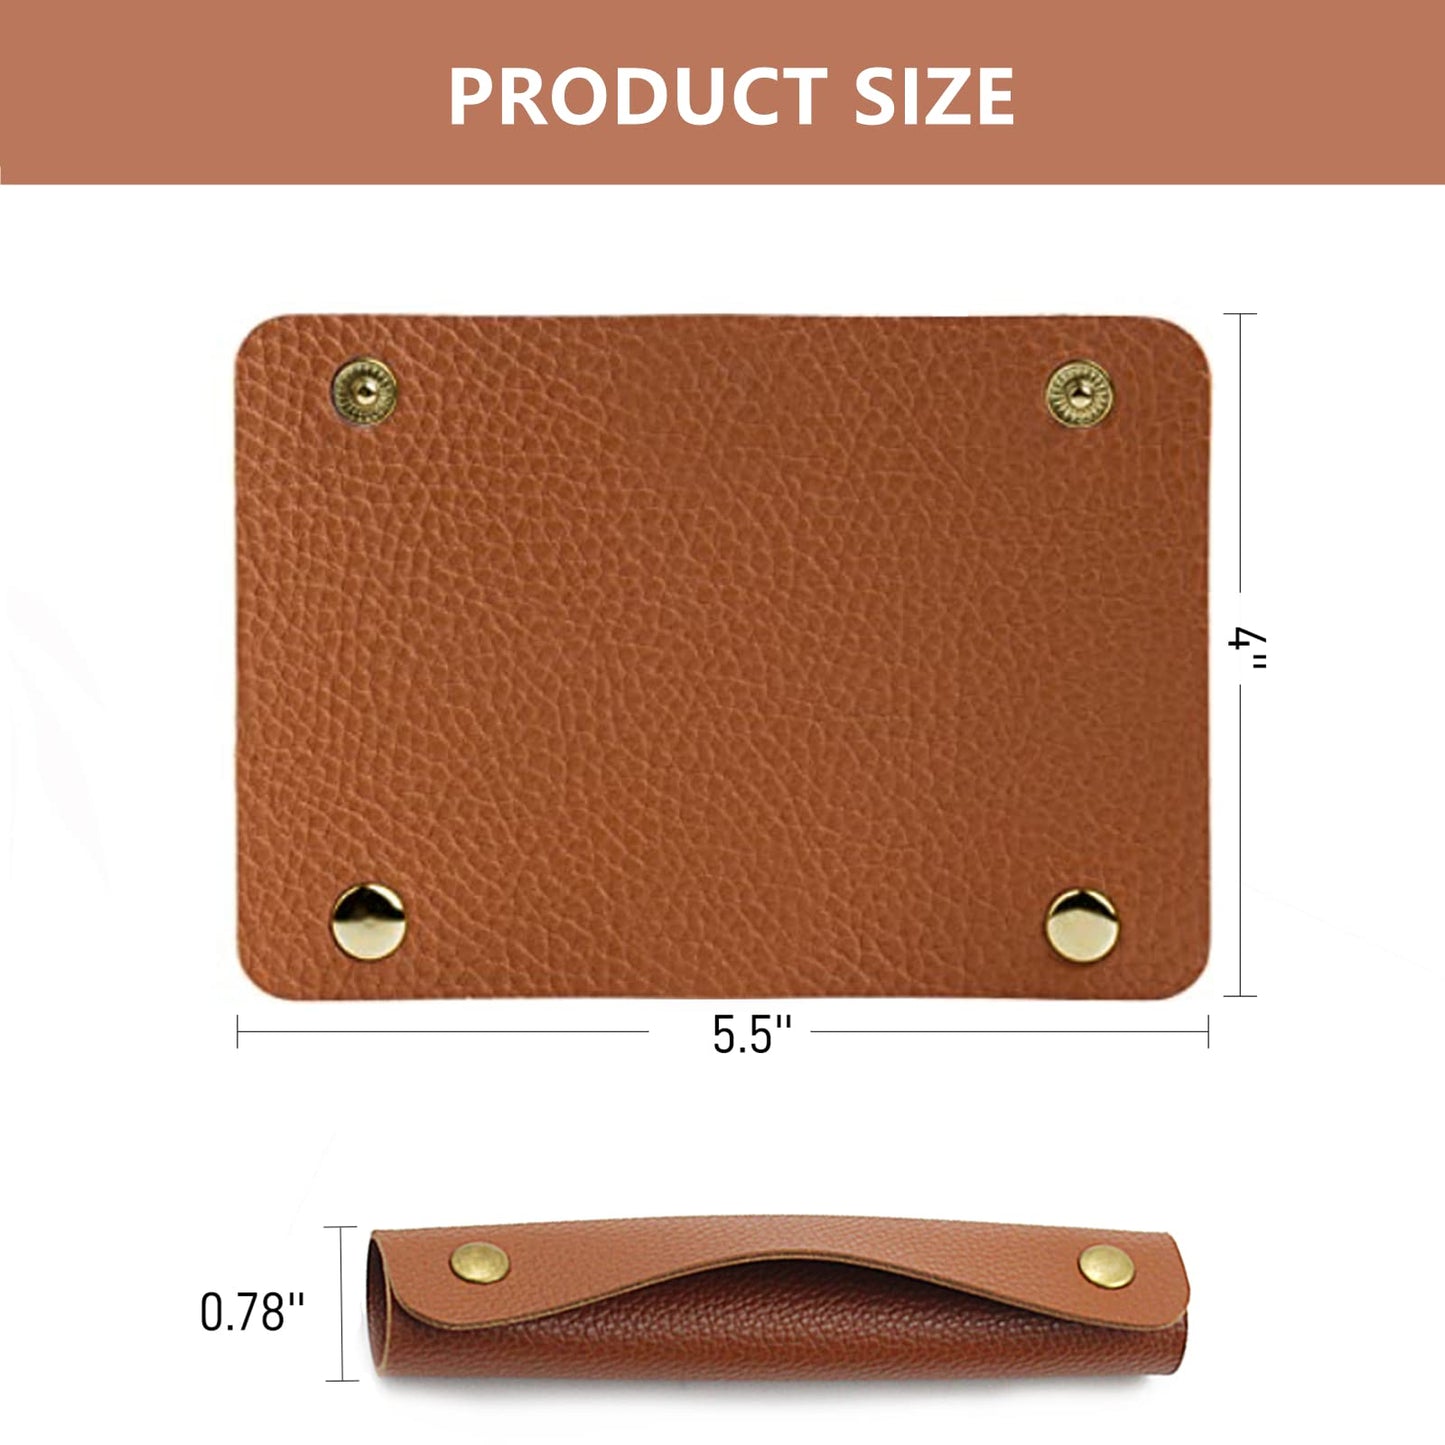 2 Pieces Leather Handbag Handle Wrap Cover